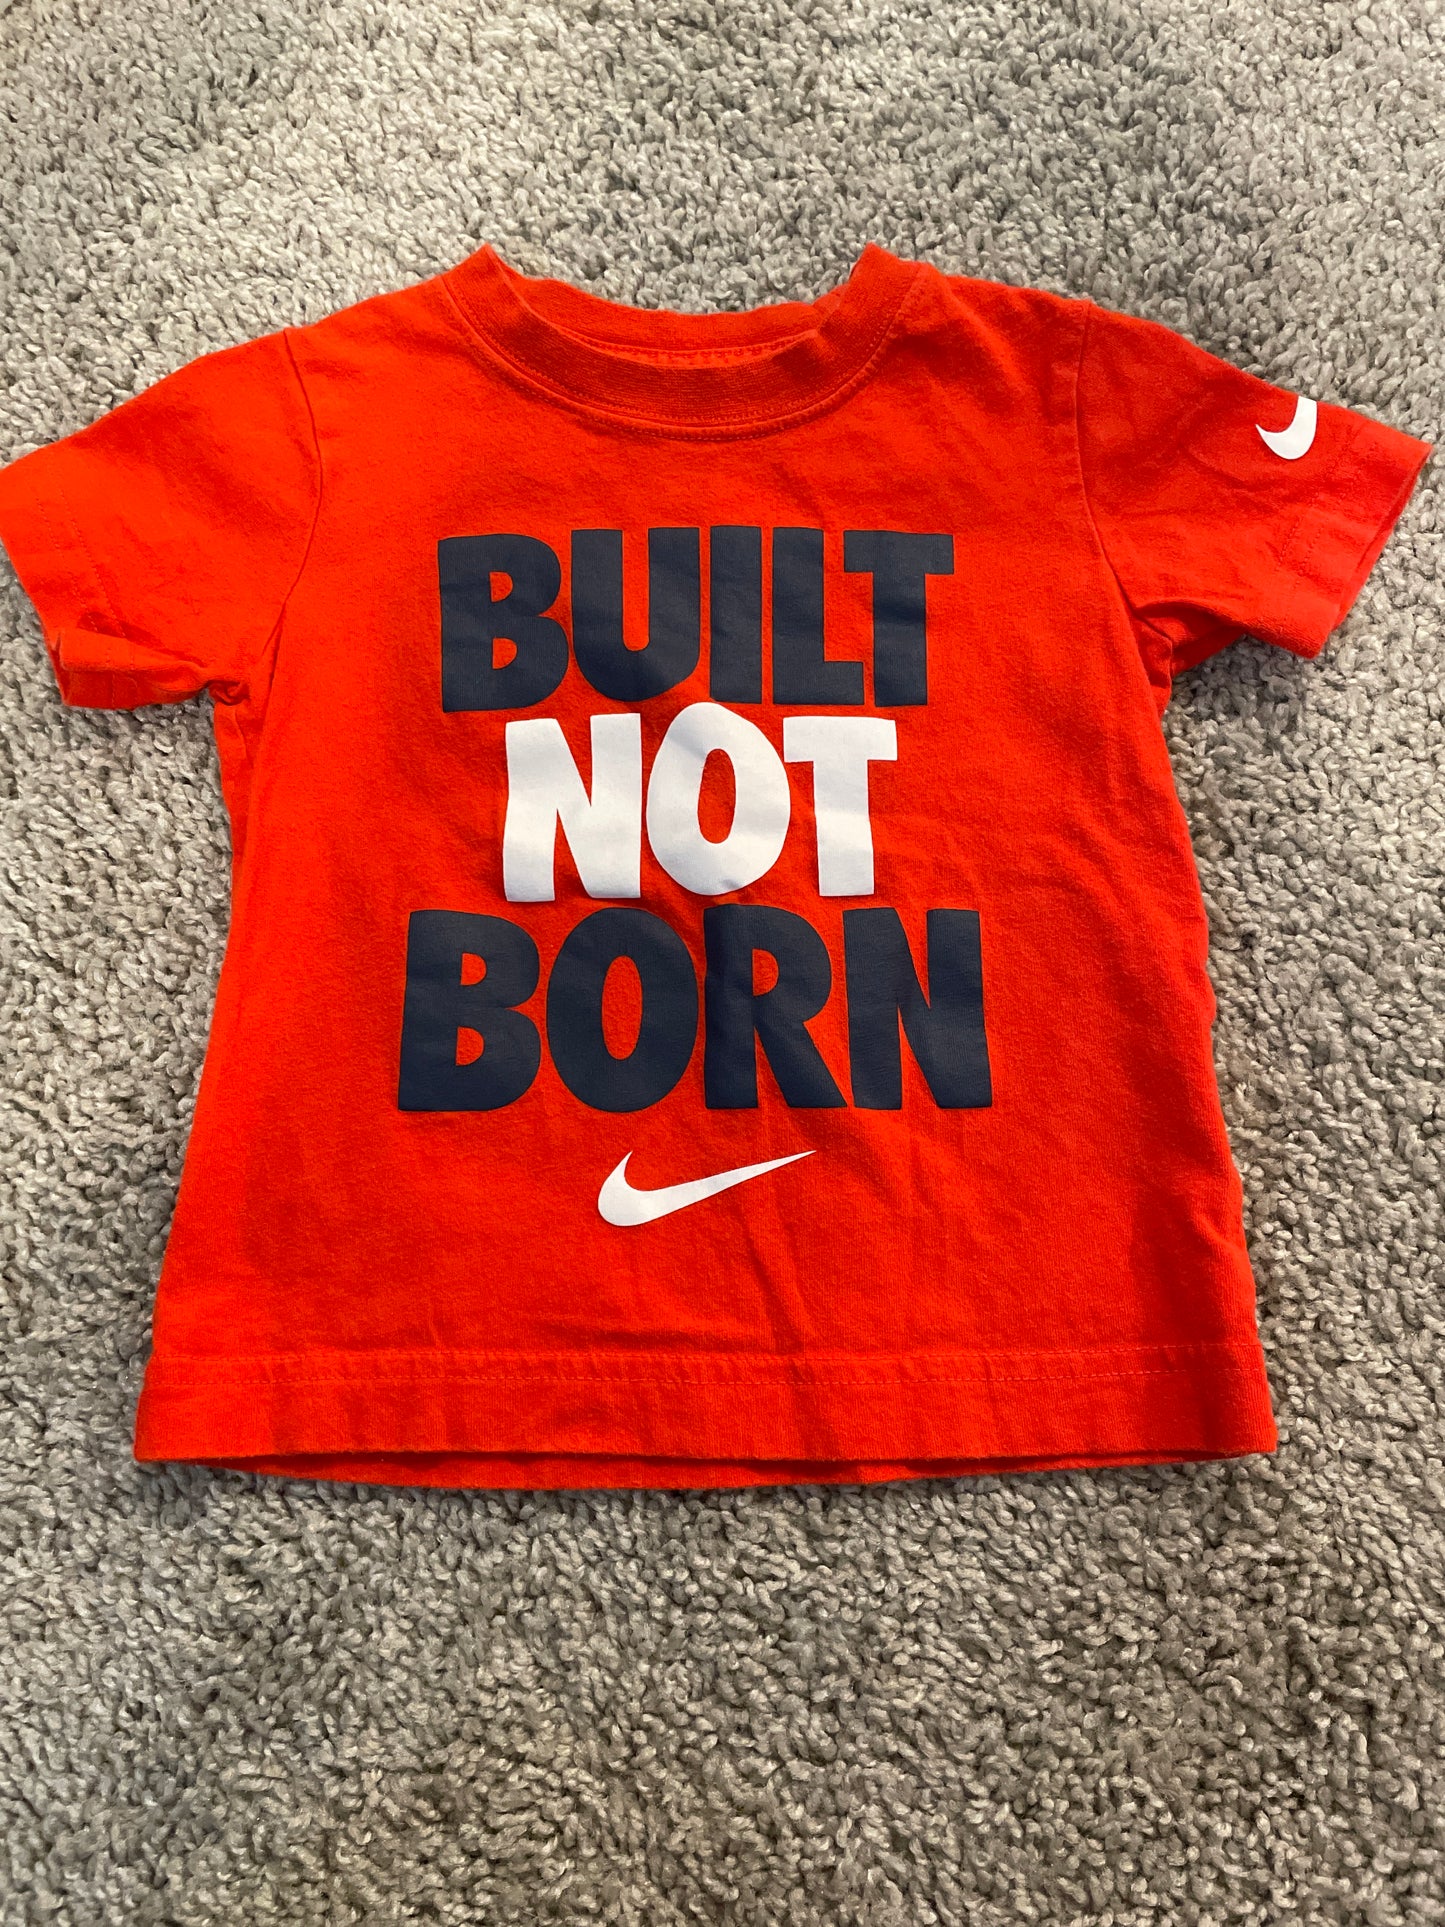 Nike Boy Tshirt Size 1-2 Years